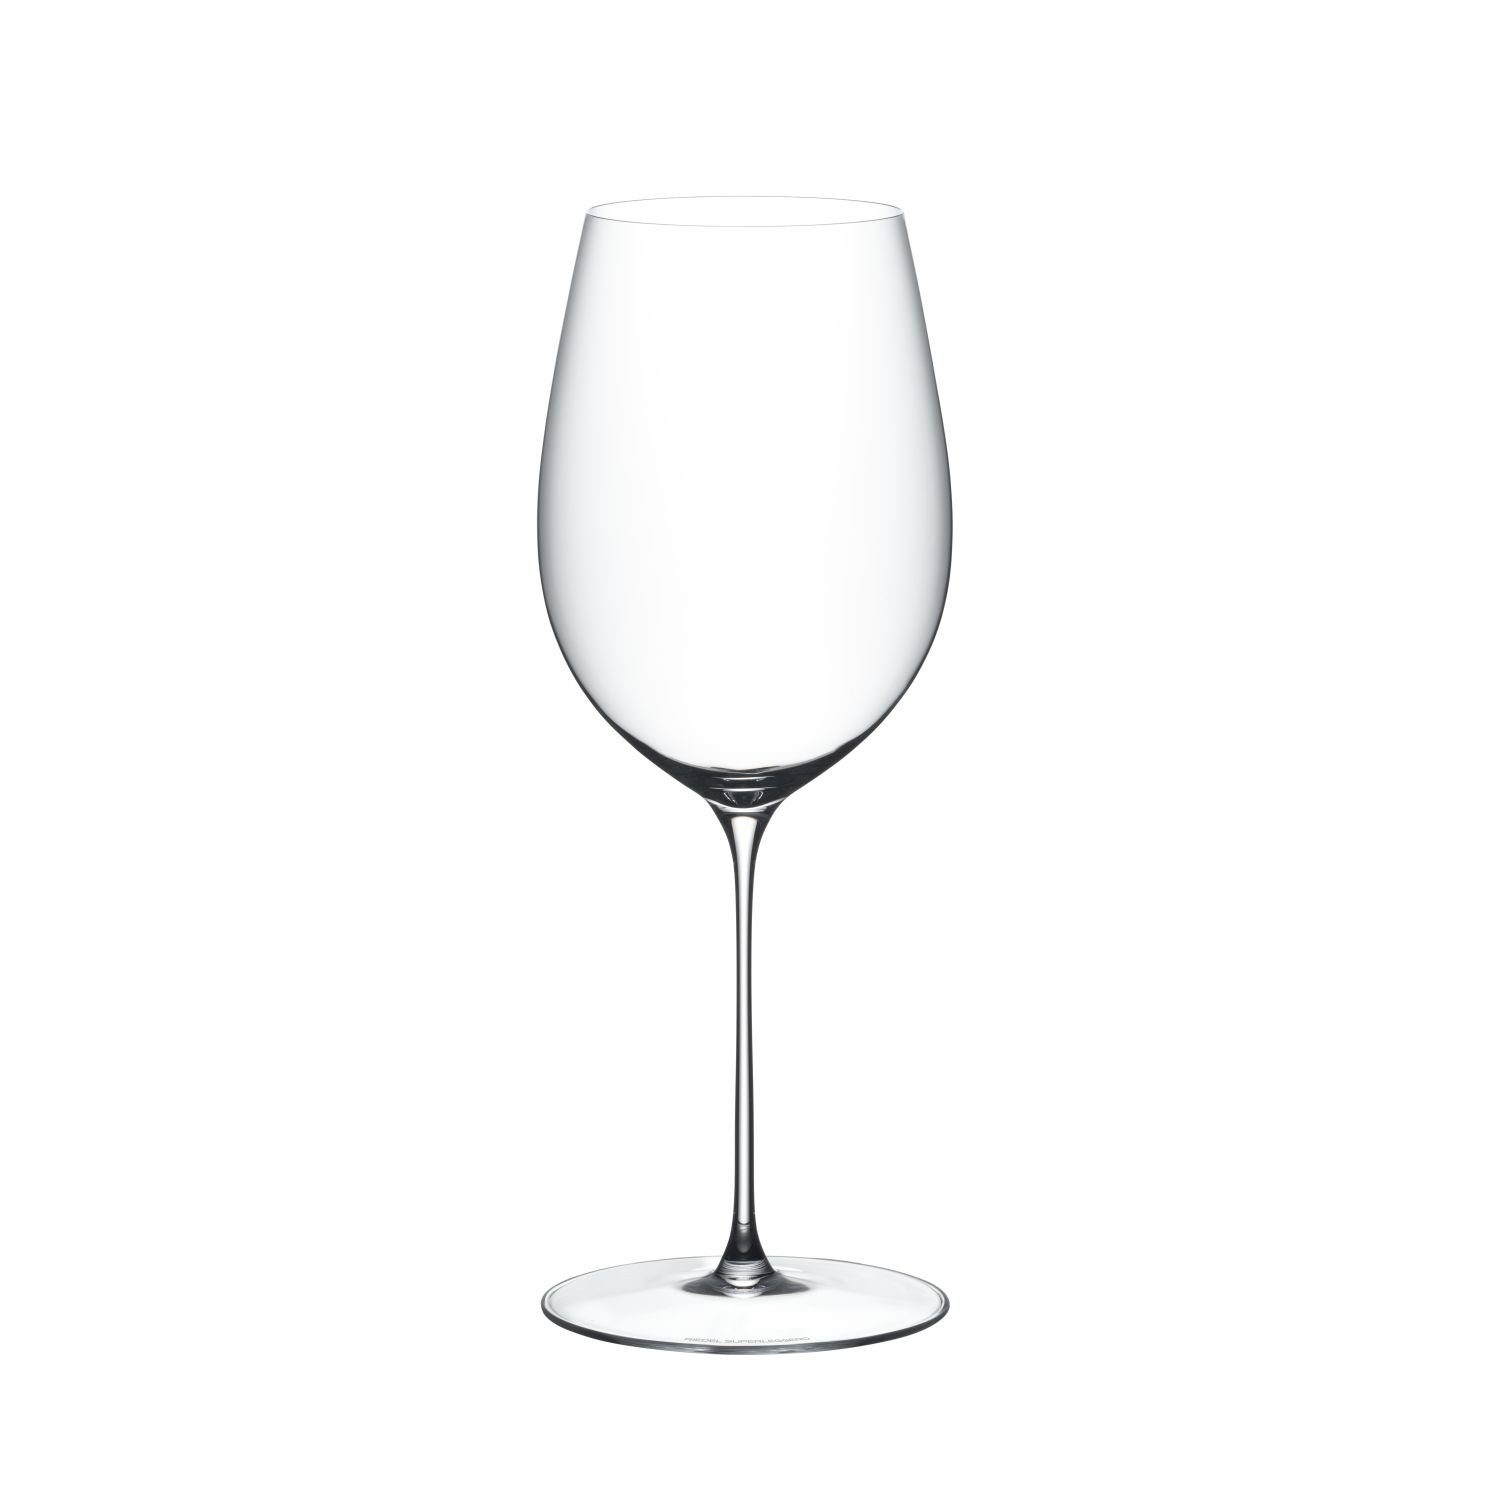 RIEDEL THE WINE GLASS COMPANY Weinglas Superleggero Bordeaux Grand Cru, Kristallglas, maschinengeblasen